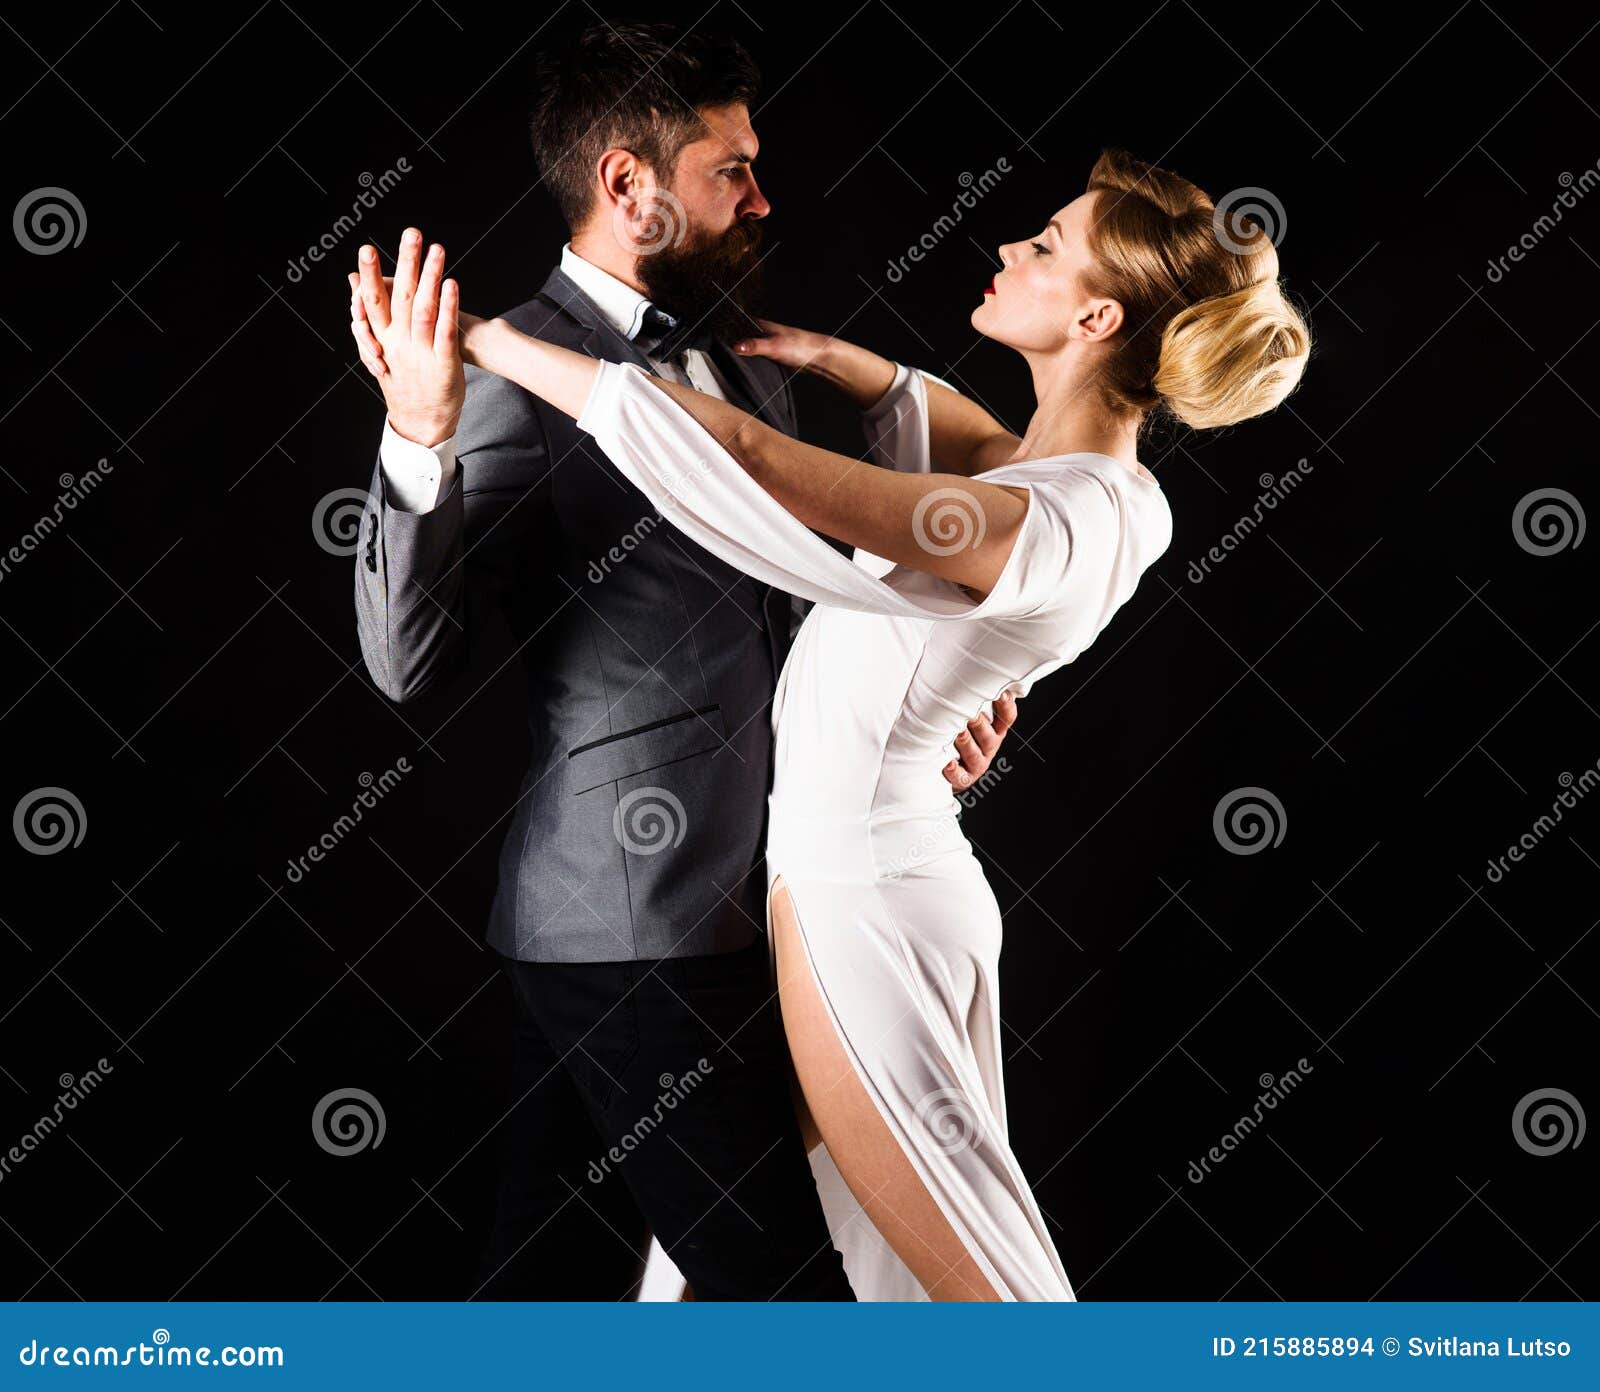 Baile De Pareja. Baile De Salón. Bailar Salsa Tango Vals. Pareja En Tierna  Pasión. Foto de archivo - Imagen de abrazo, samba: 215885894